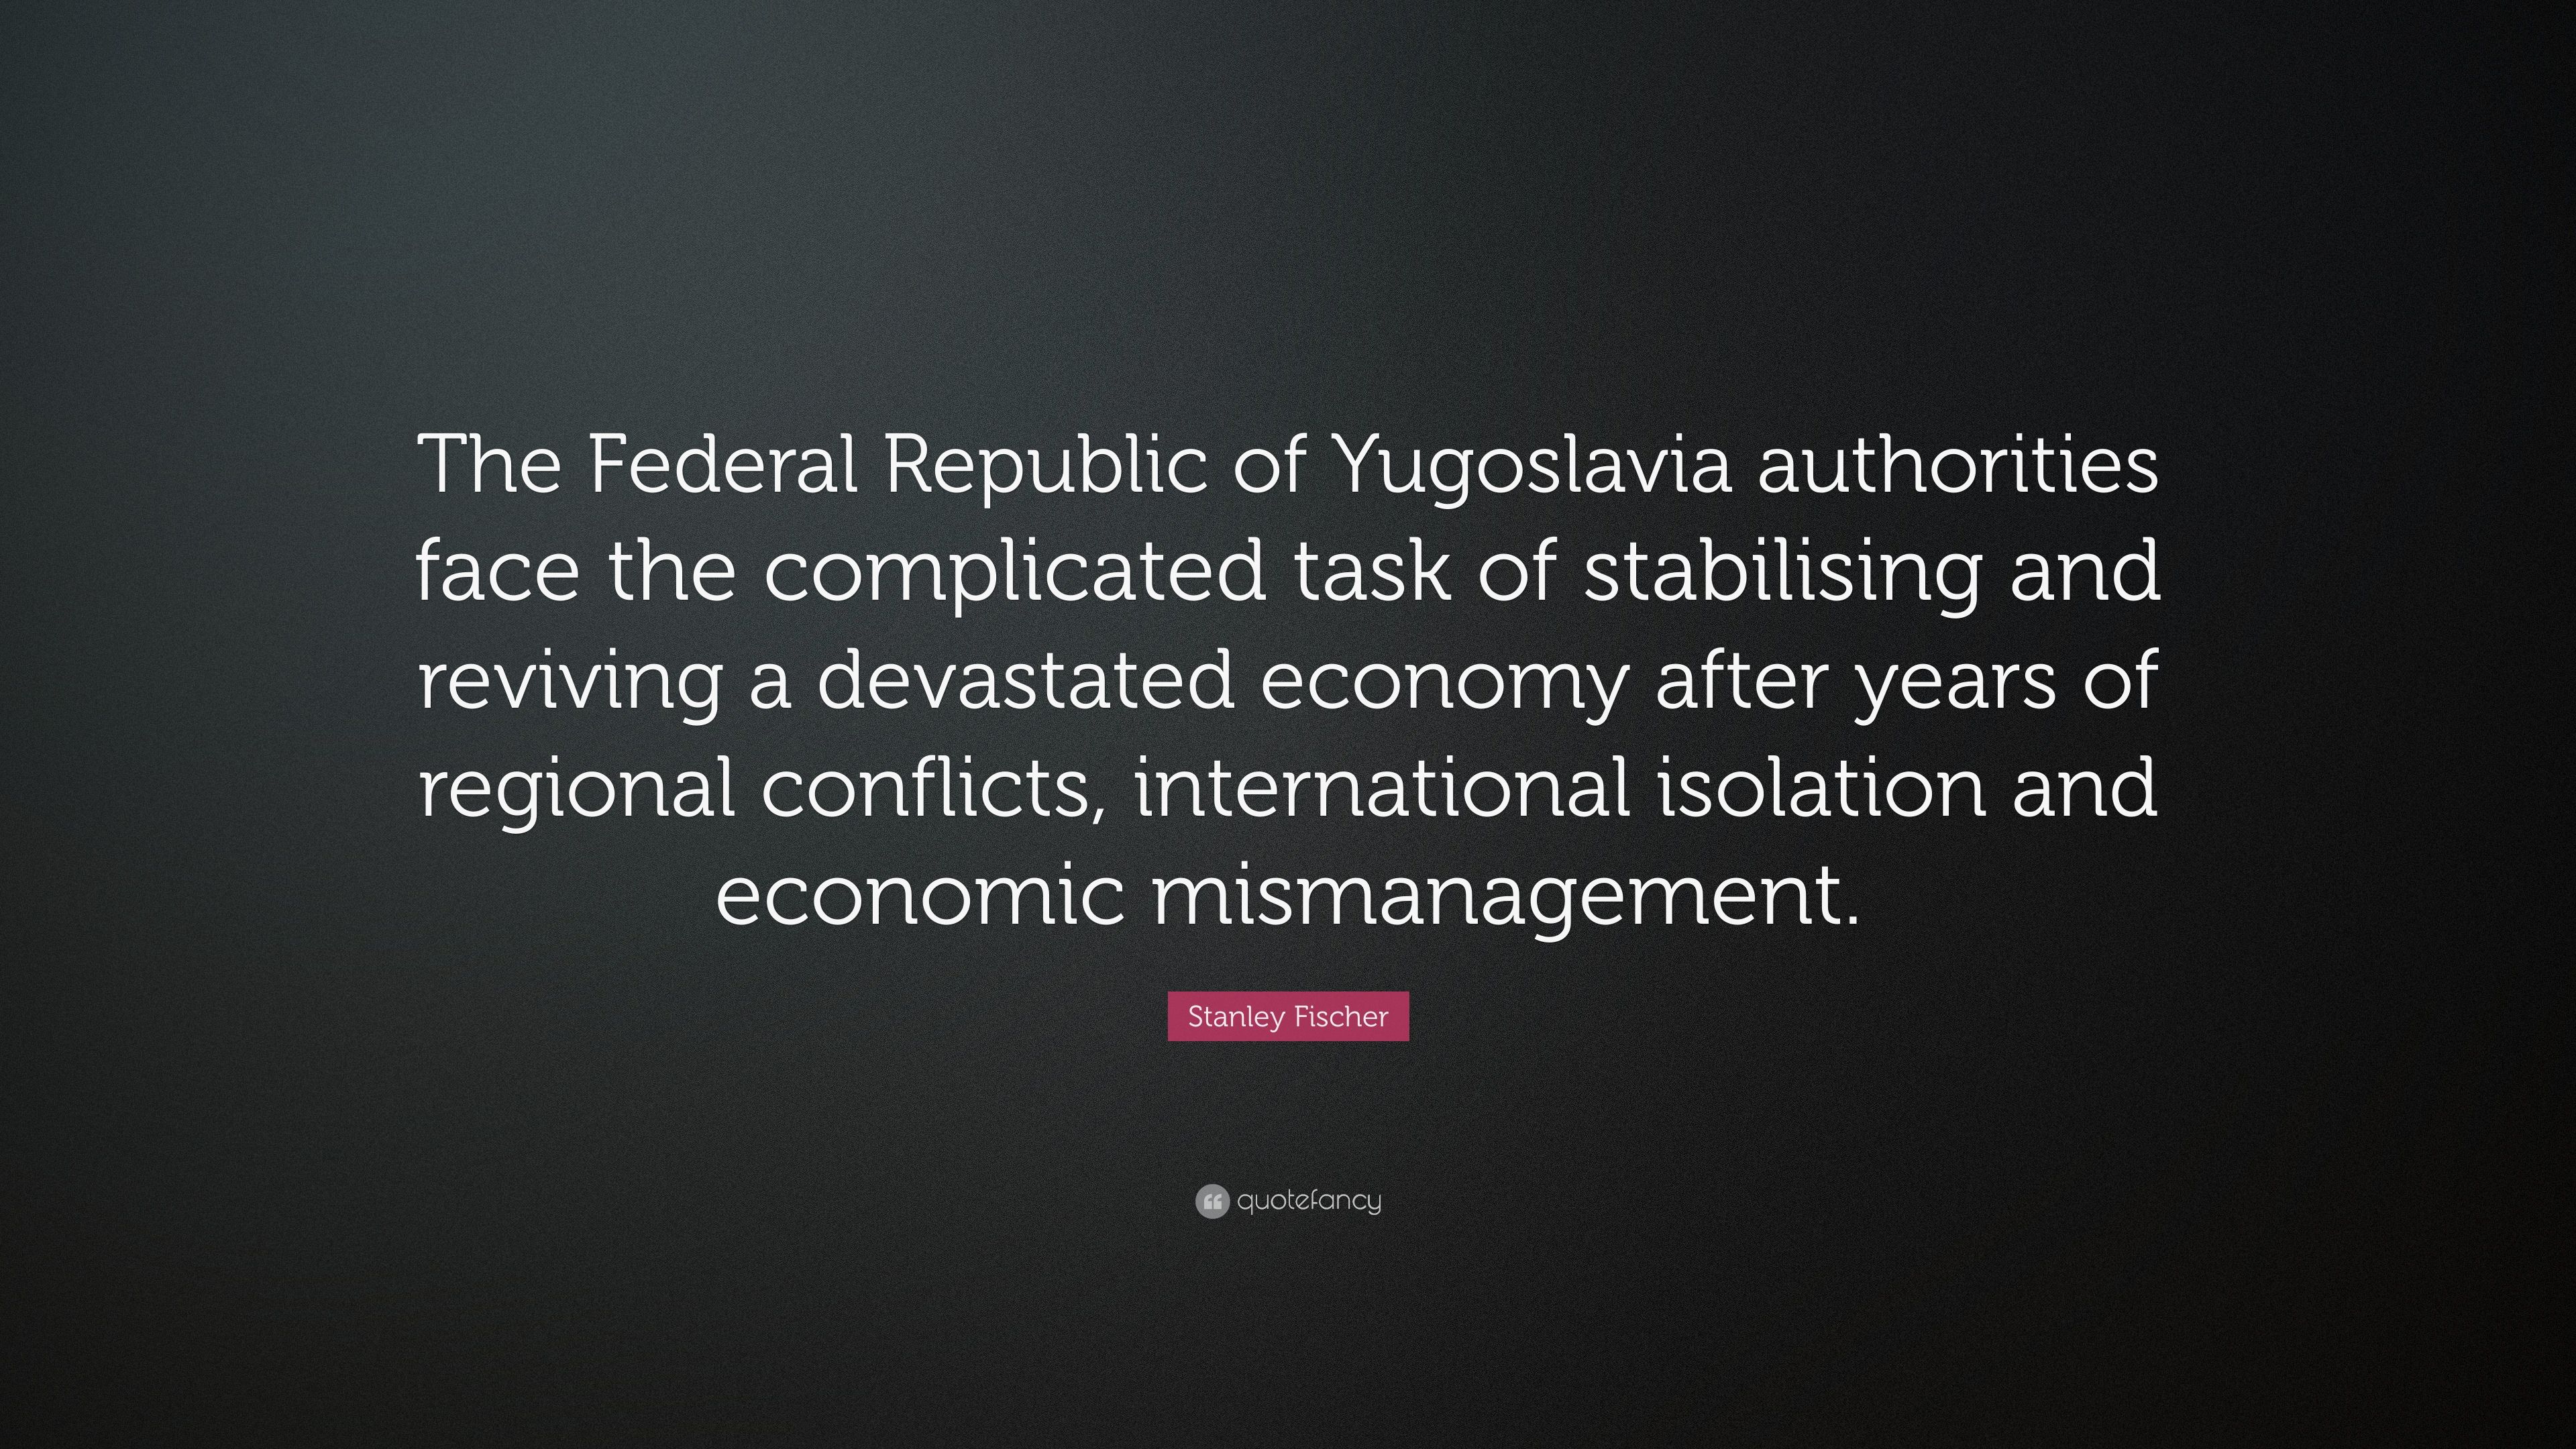 Stanley Fischer Quote: “The Federal Republic of Yugoslavia